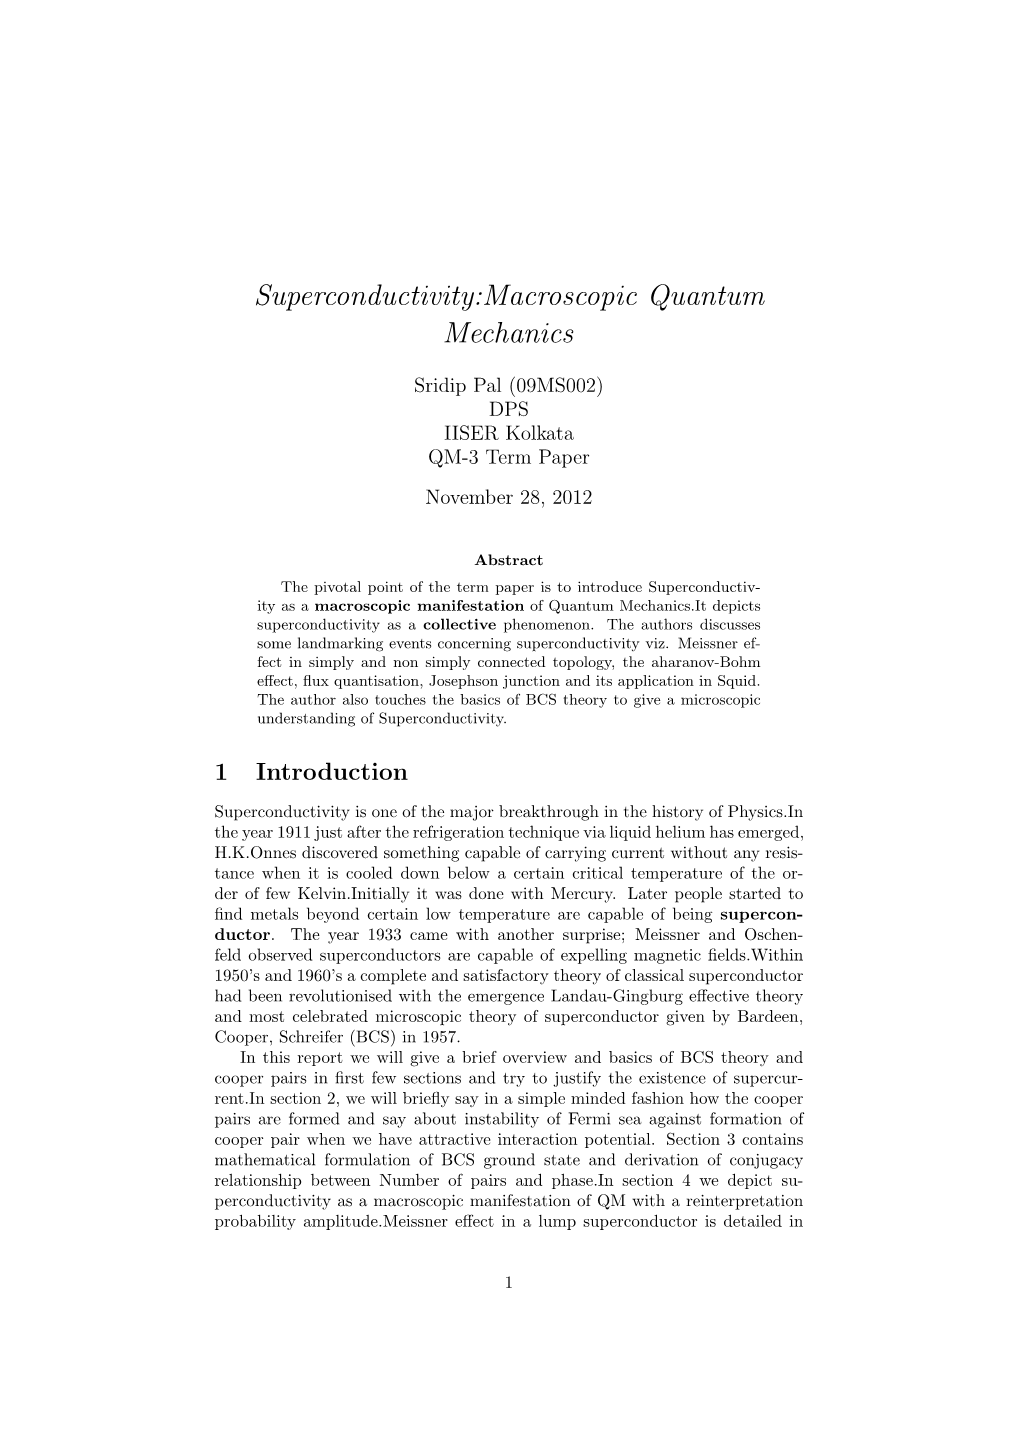 Superconductivity:Macroscopic Quantum Mechanics